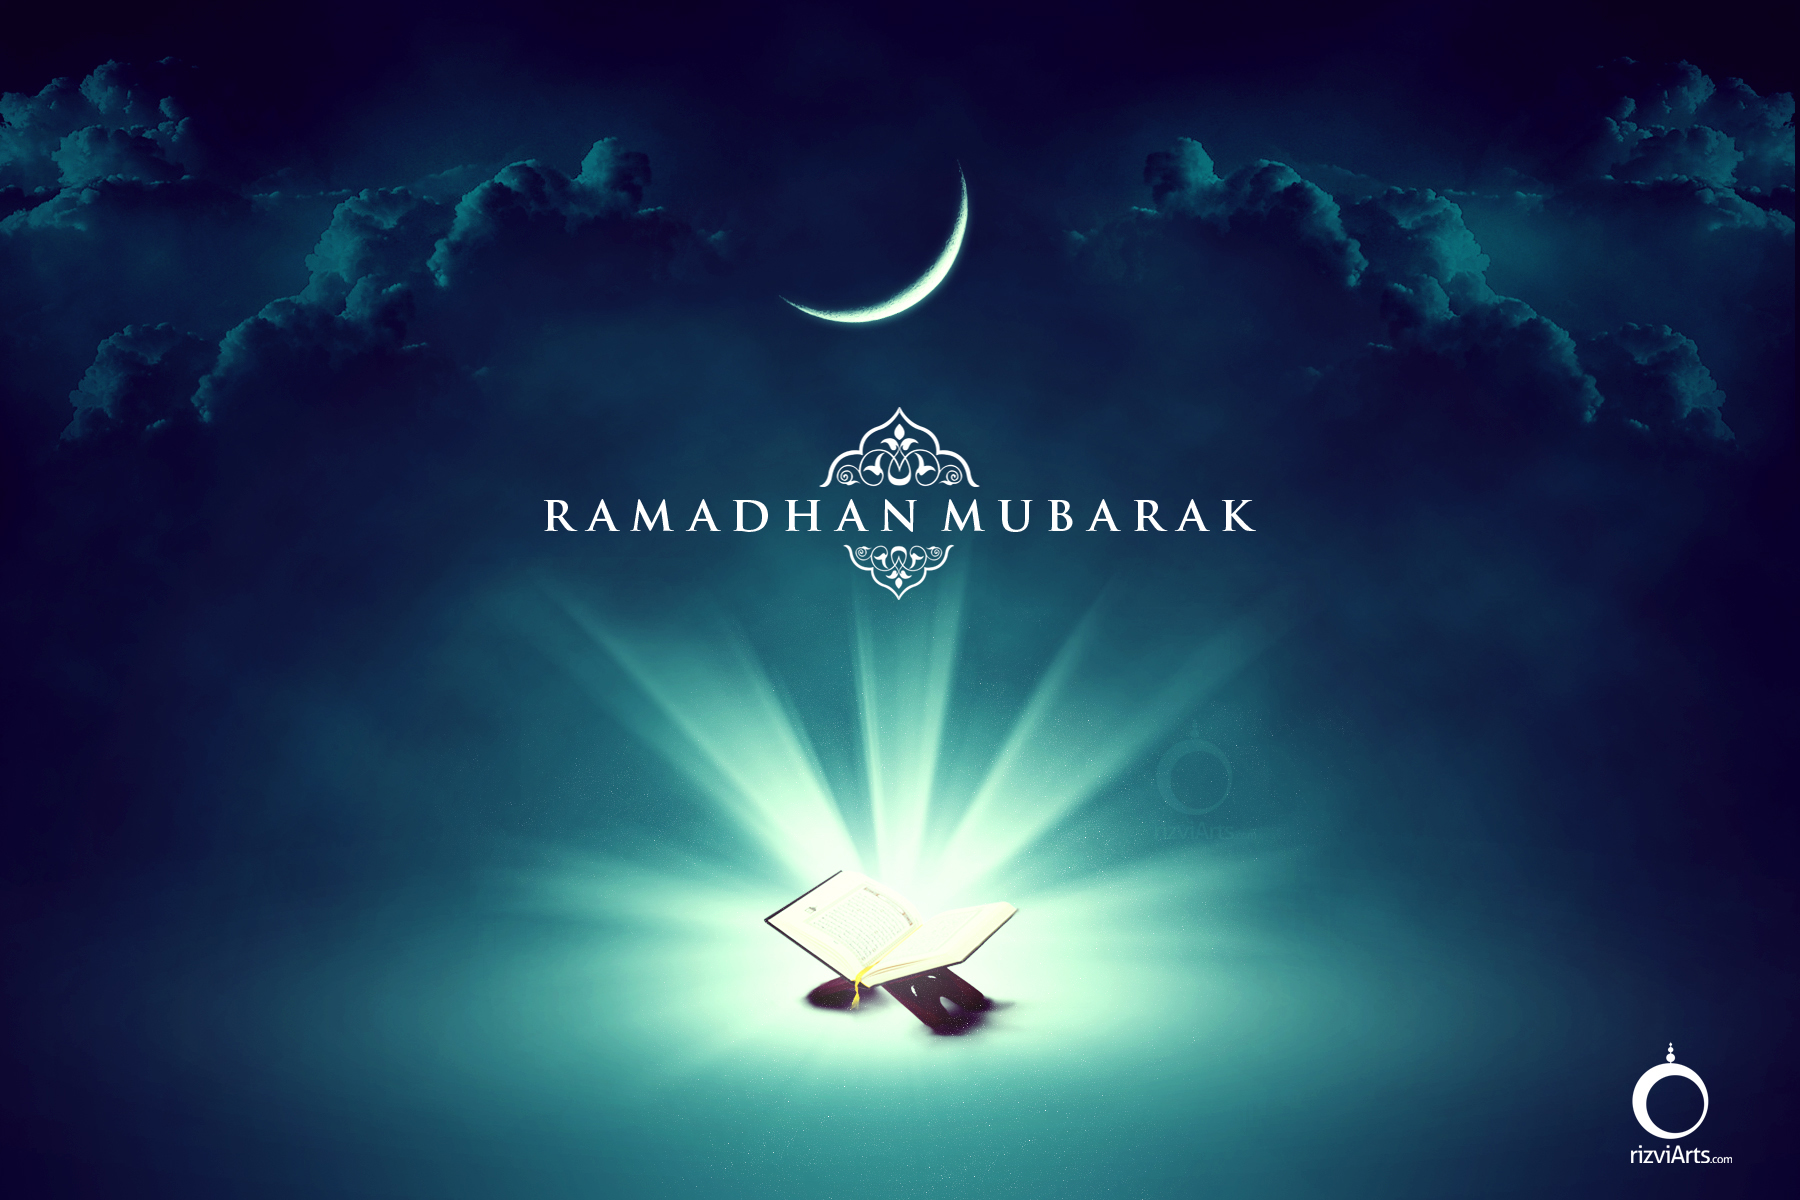 Ramadhan Mubarak - 2013 by rizviArts on DeviantArt